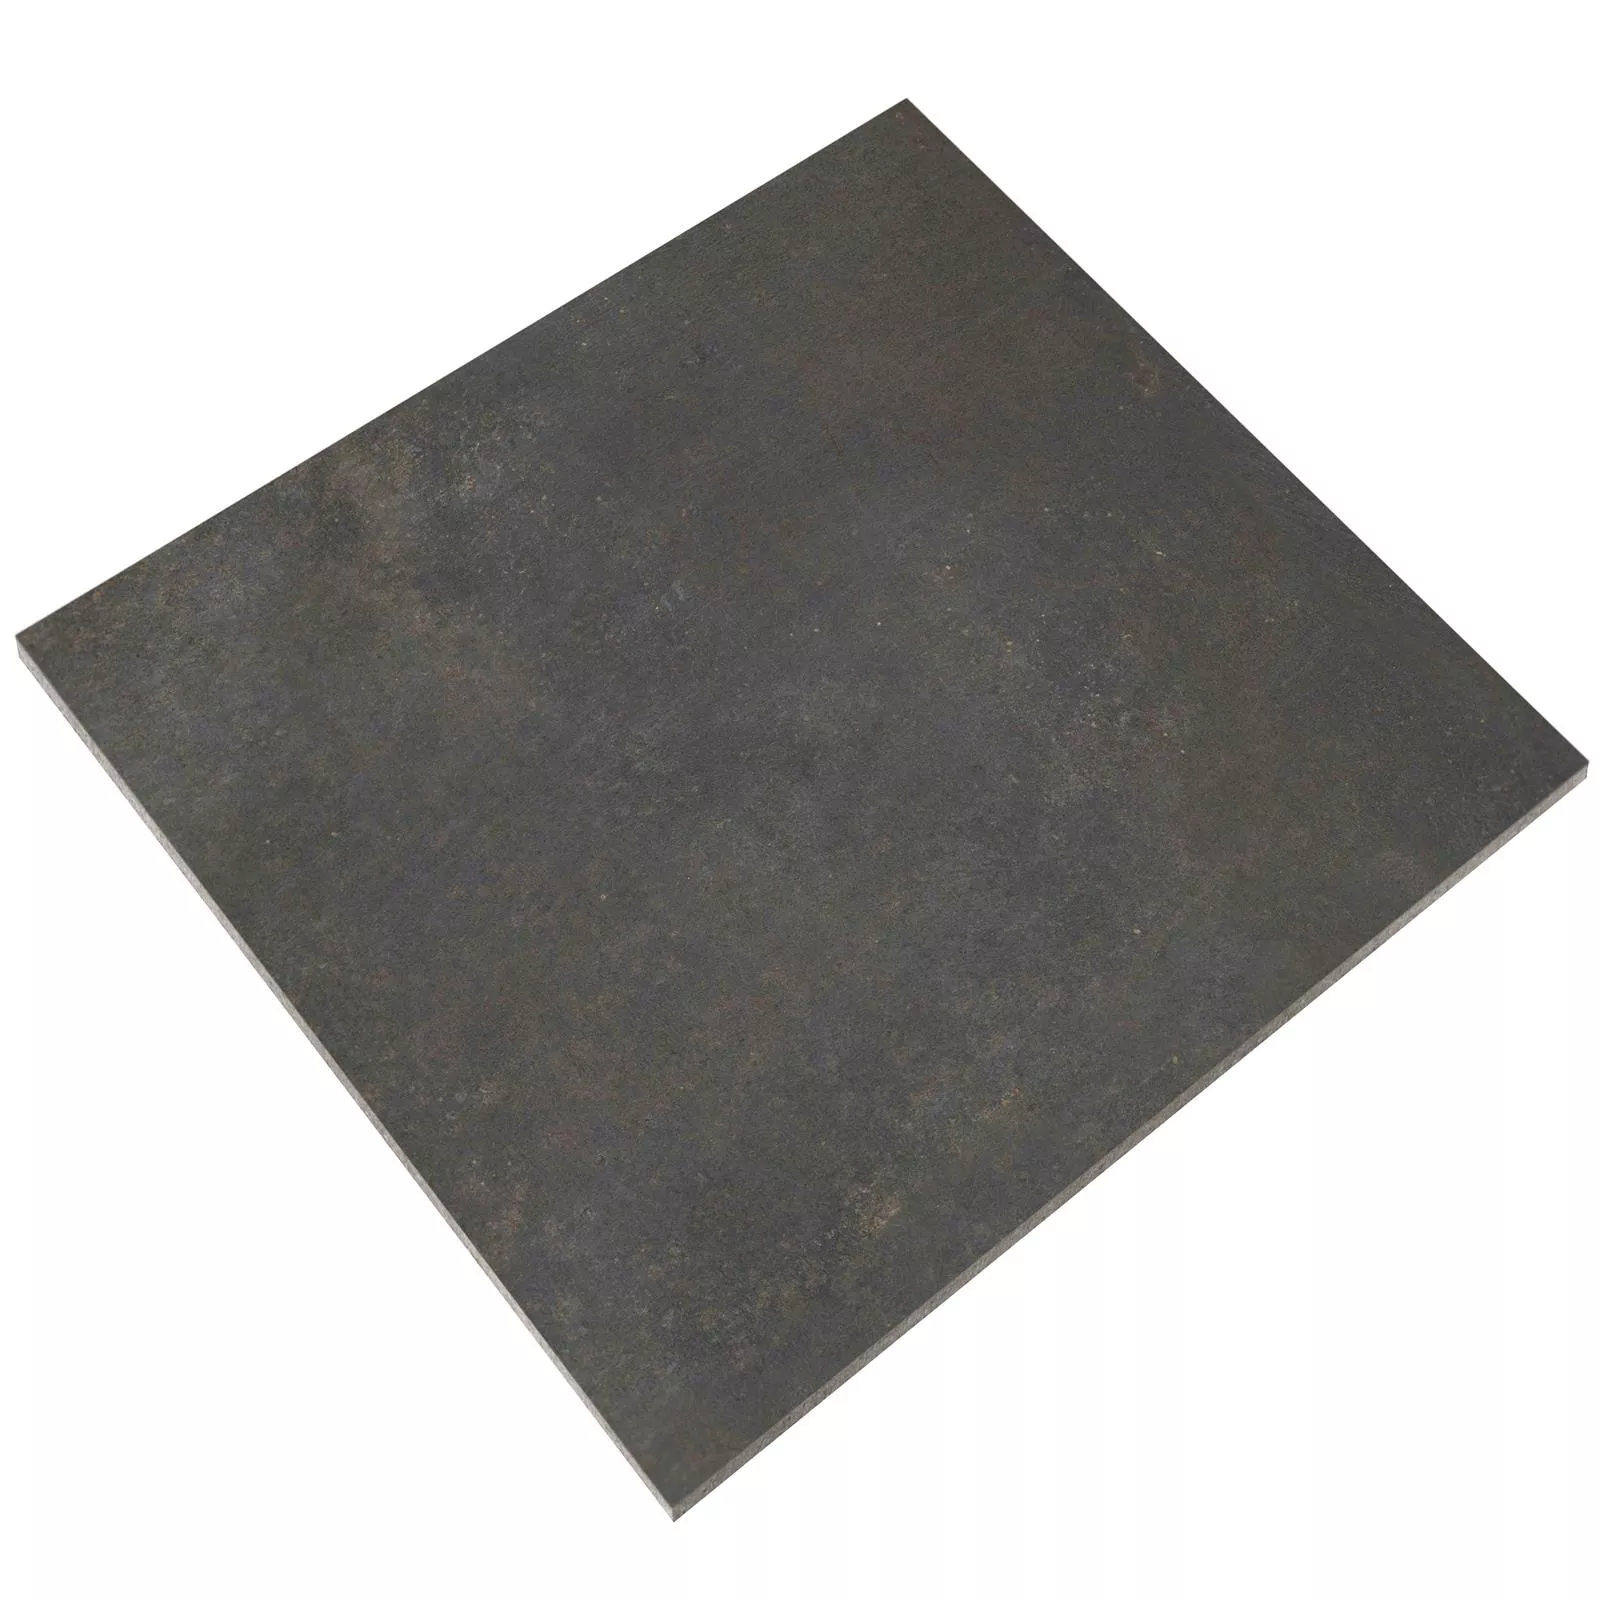 Sample Floor Tiles Peaceway Anthracite 60x60cm